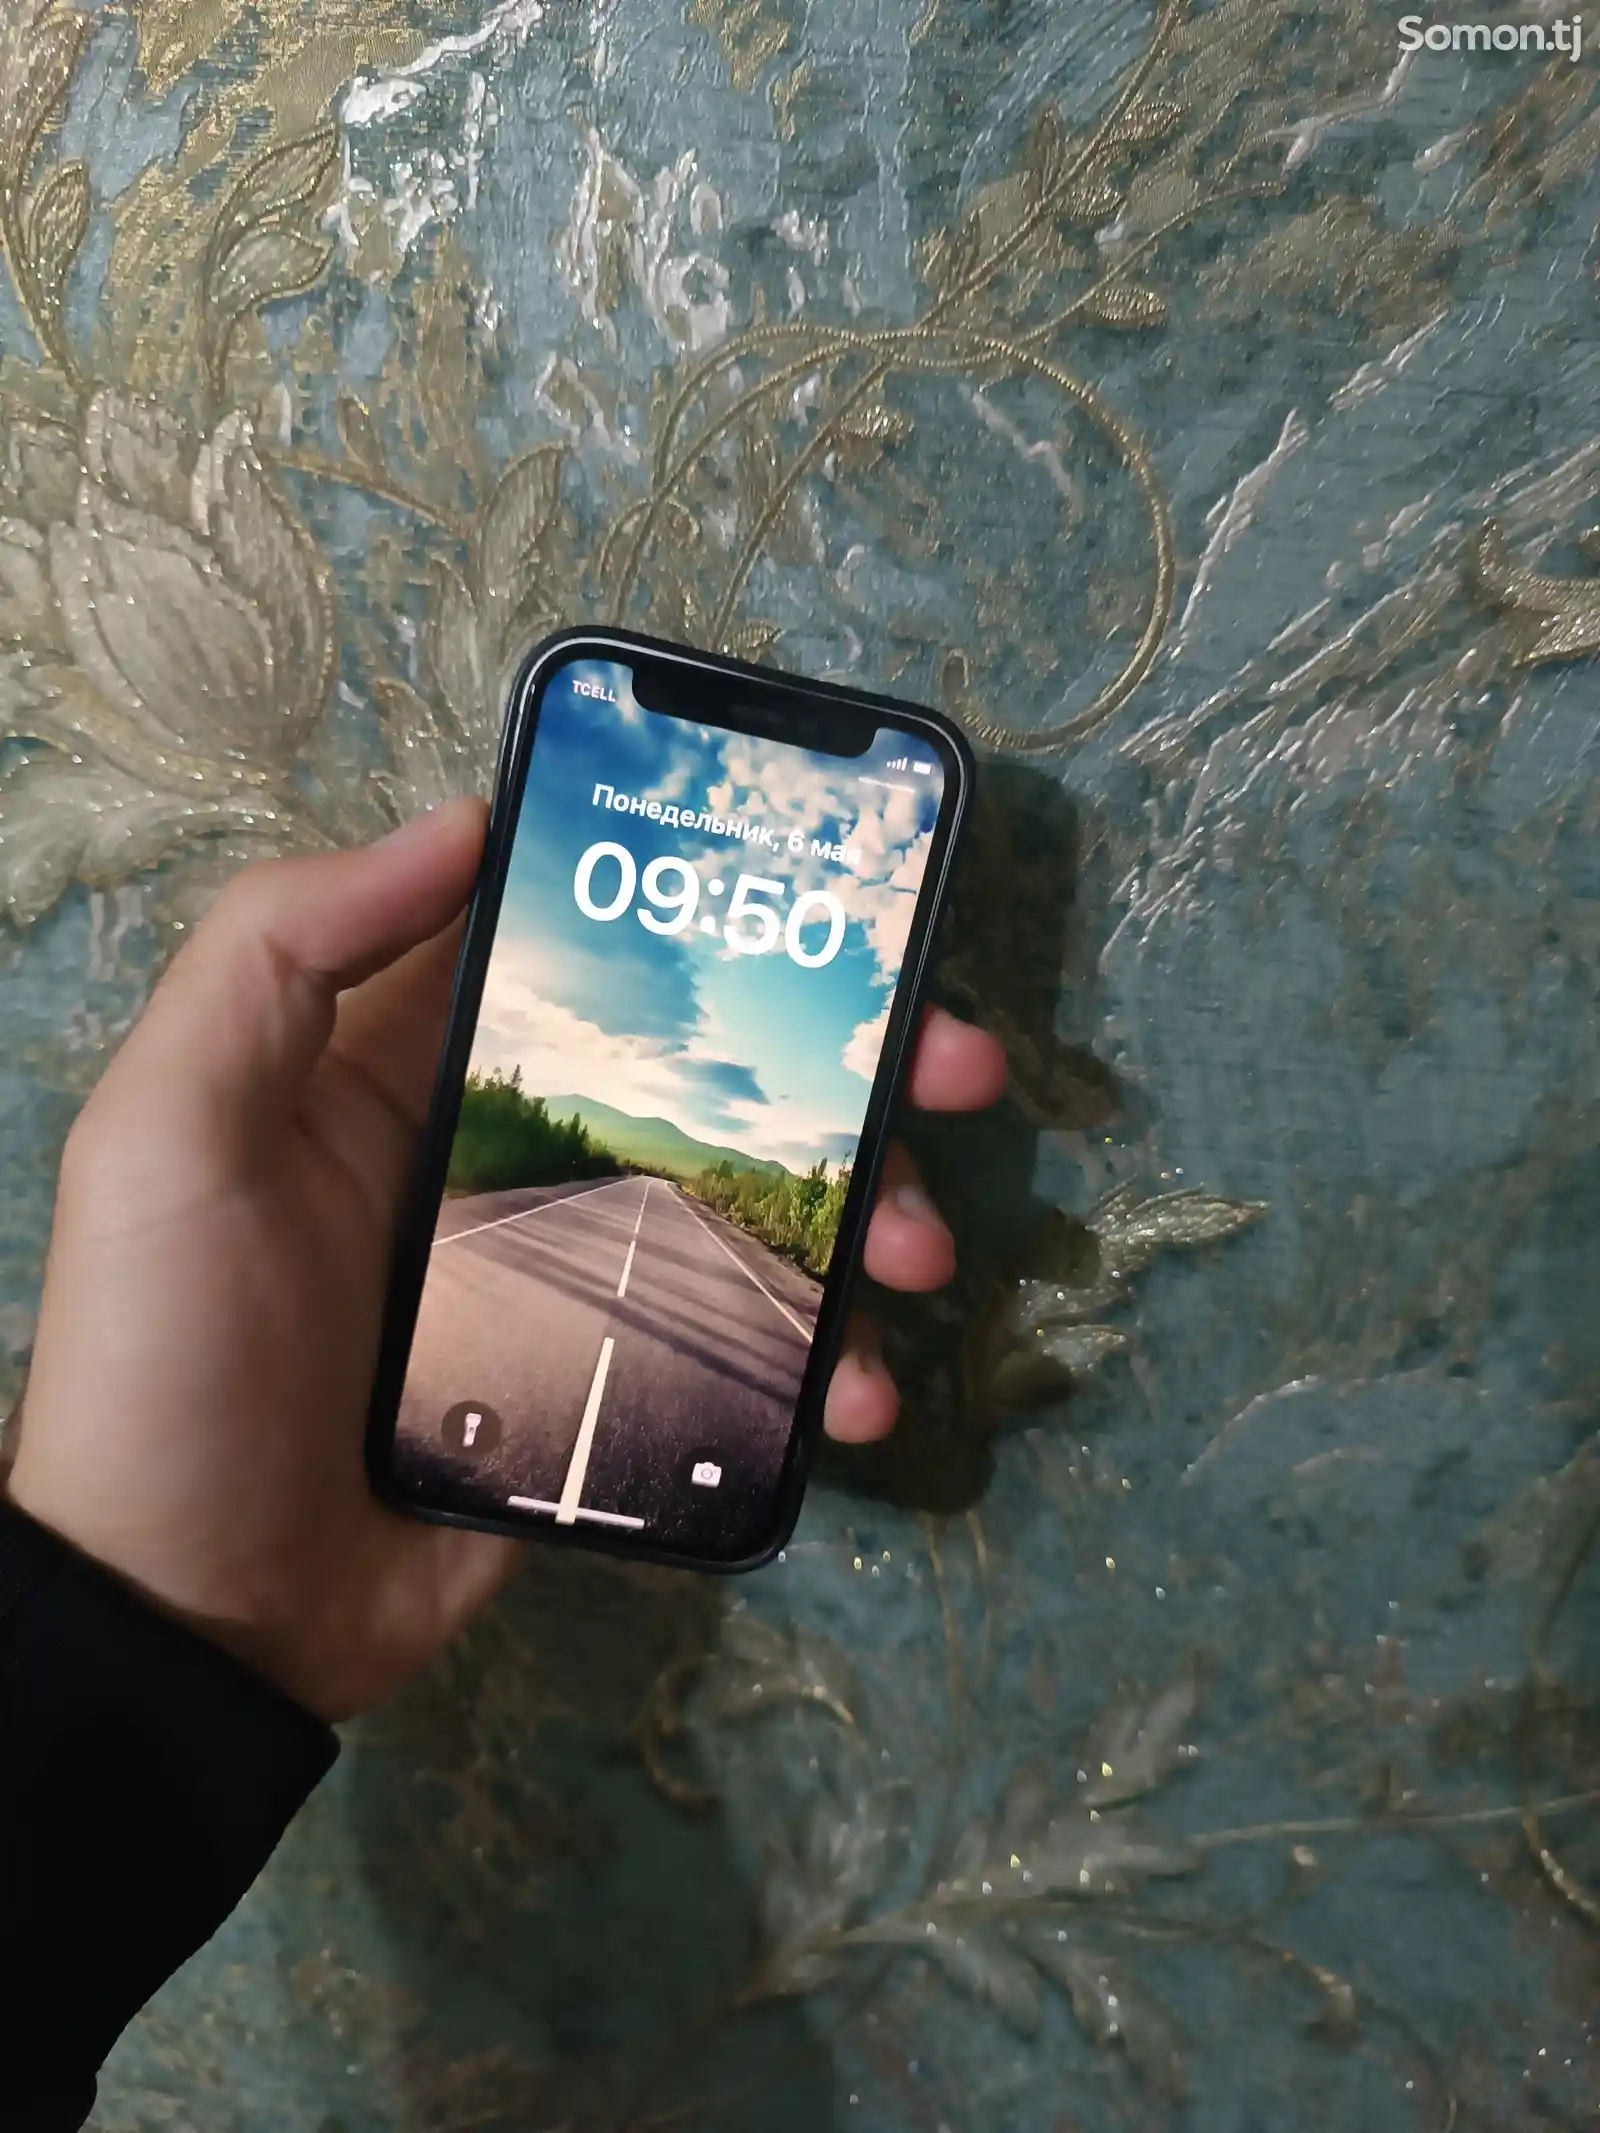 Apple iPhone 12 mini, 64 gb, White-2